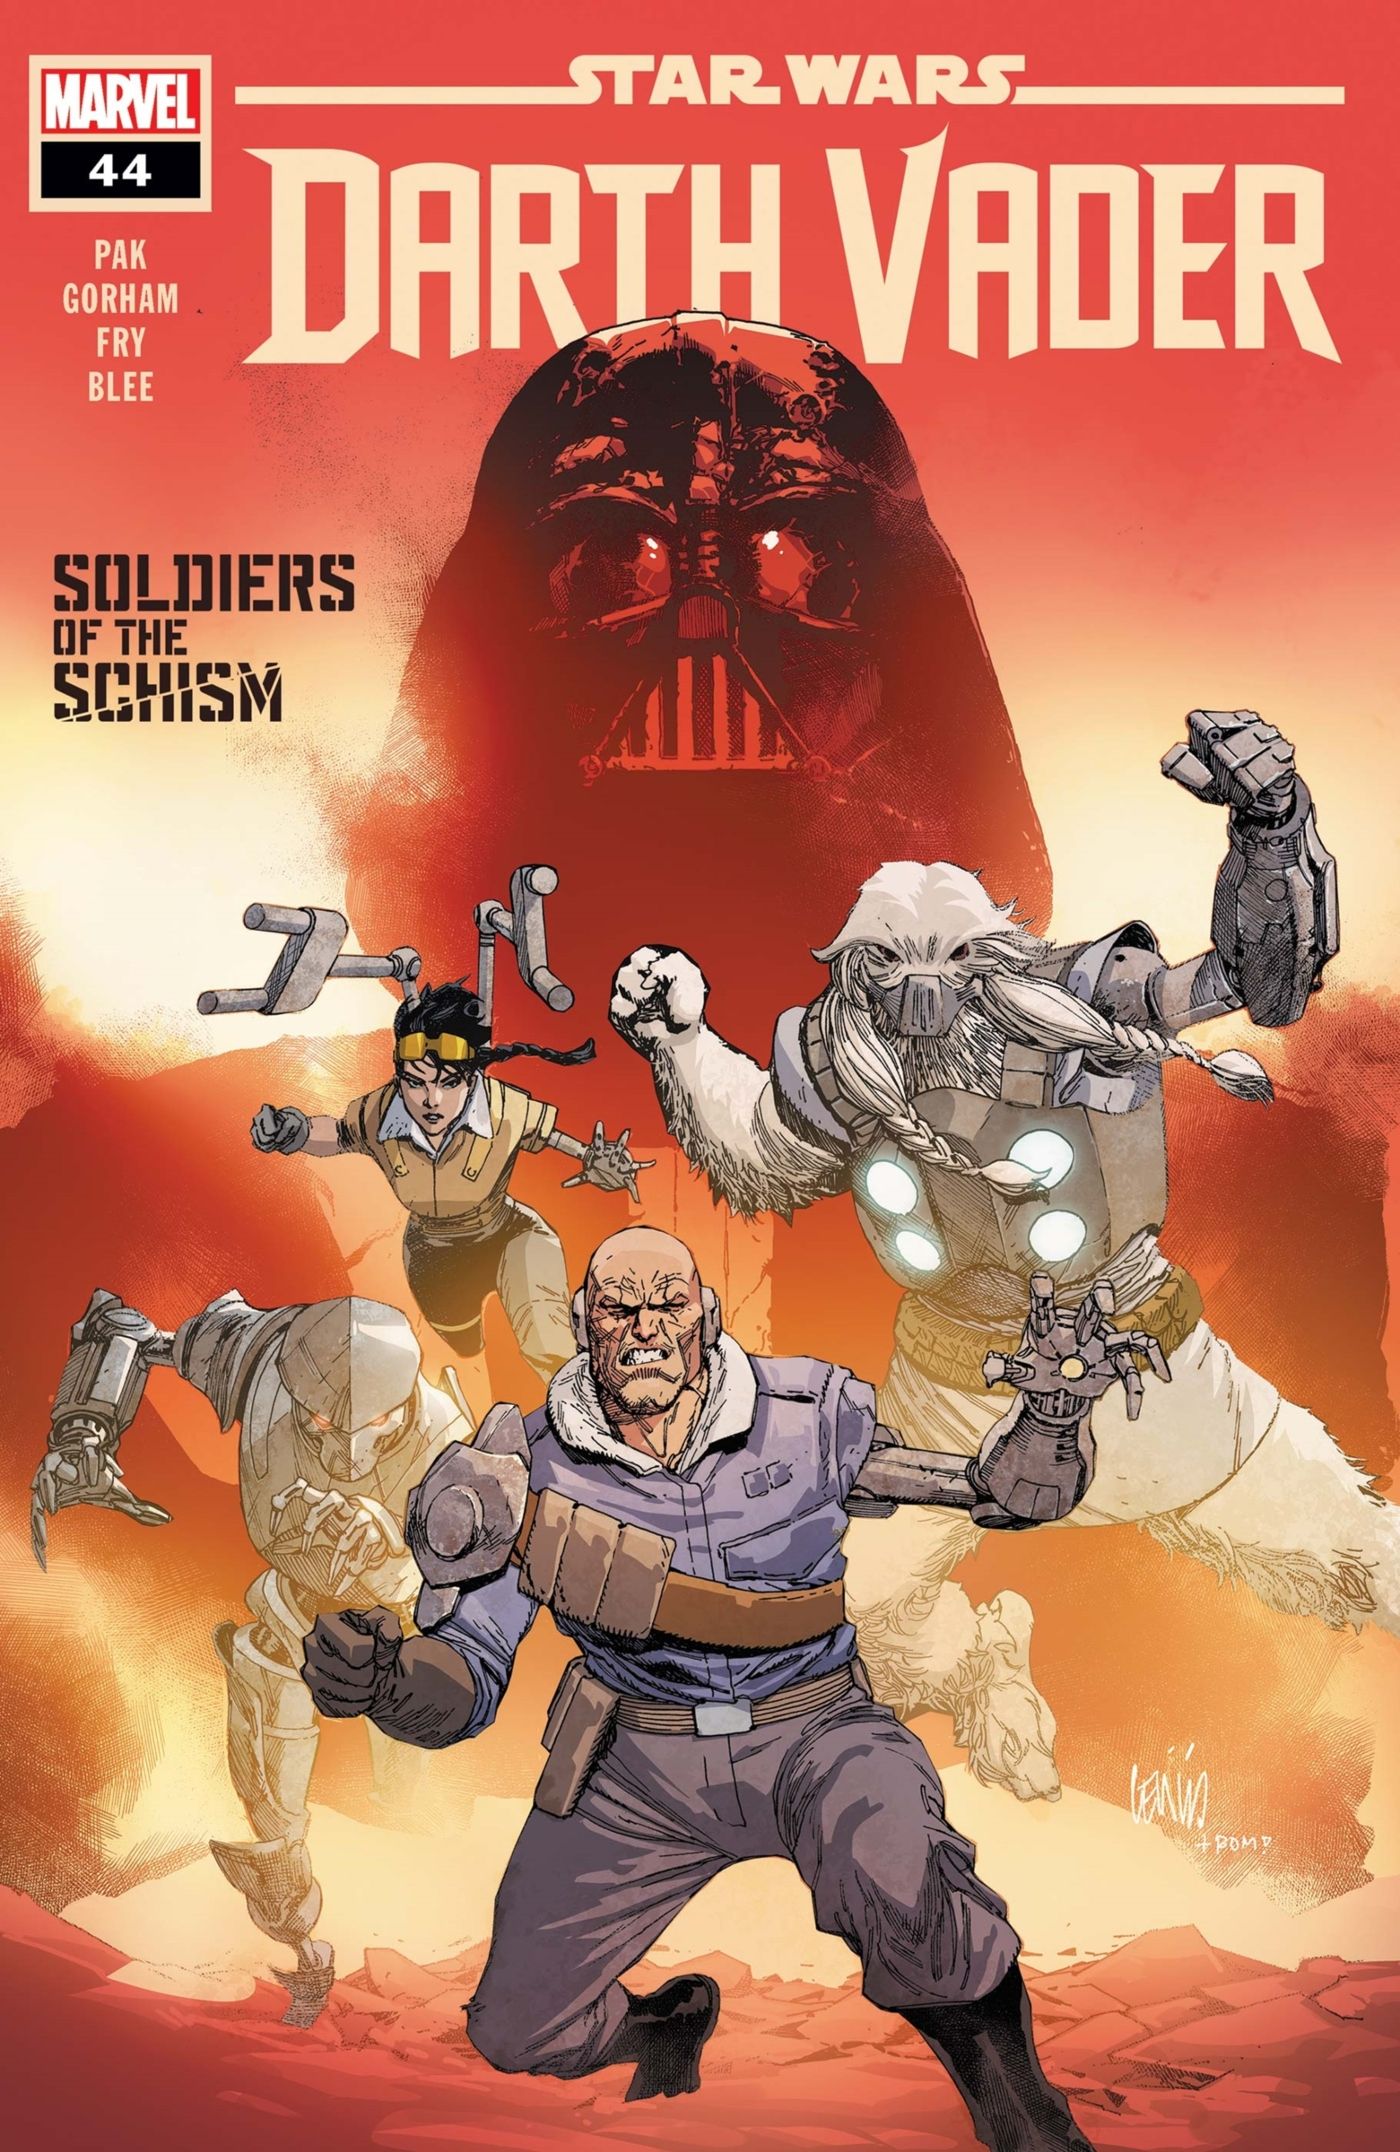 Star Wars: Darth Vader #44 Capa com Darth Vader e seu MAR Corps.